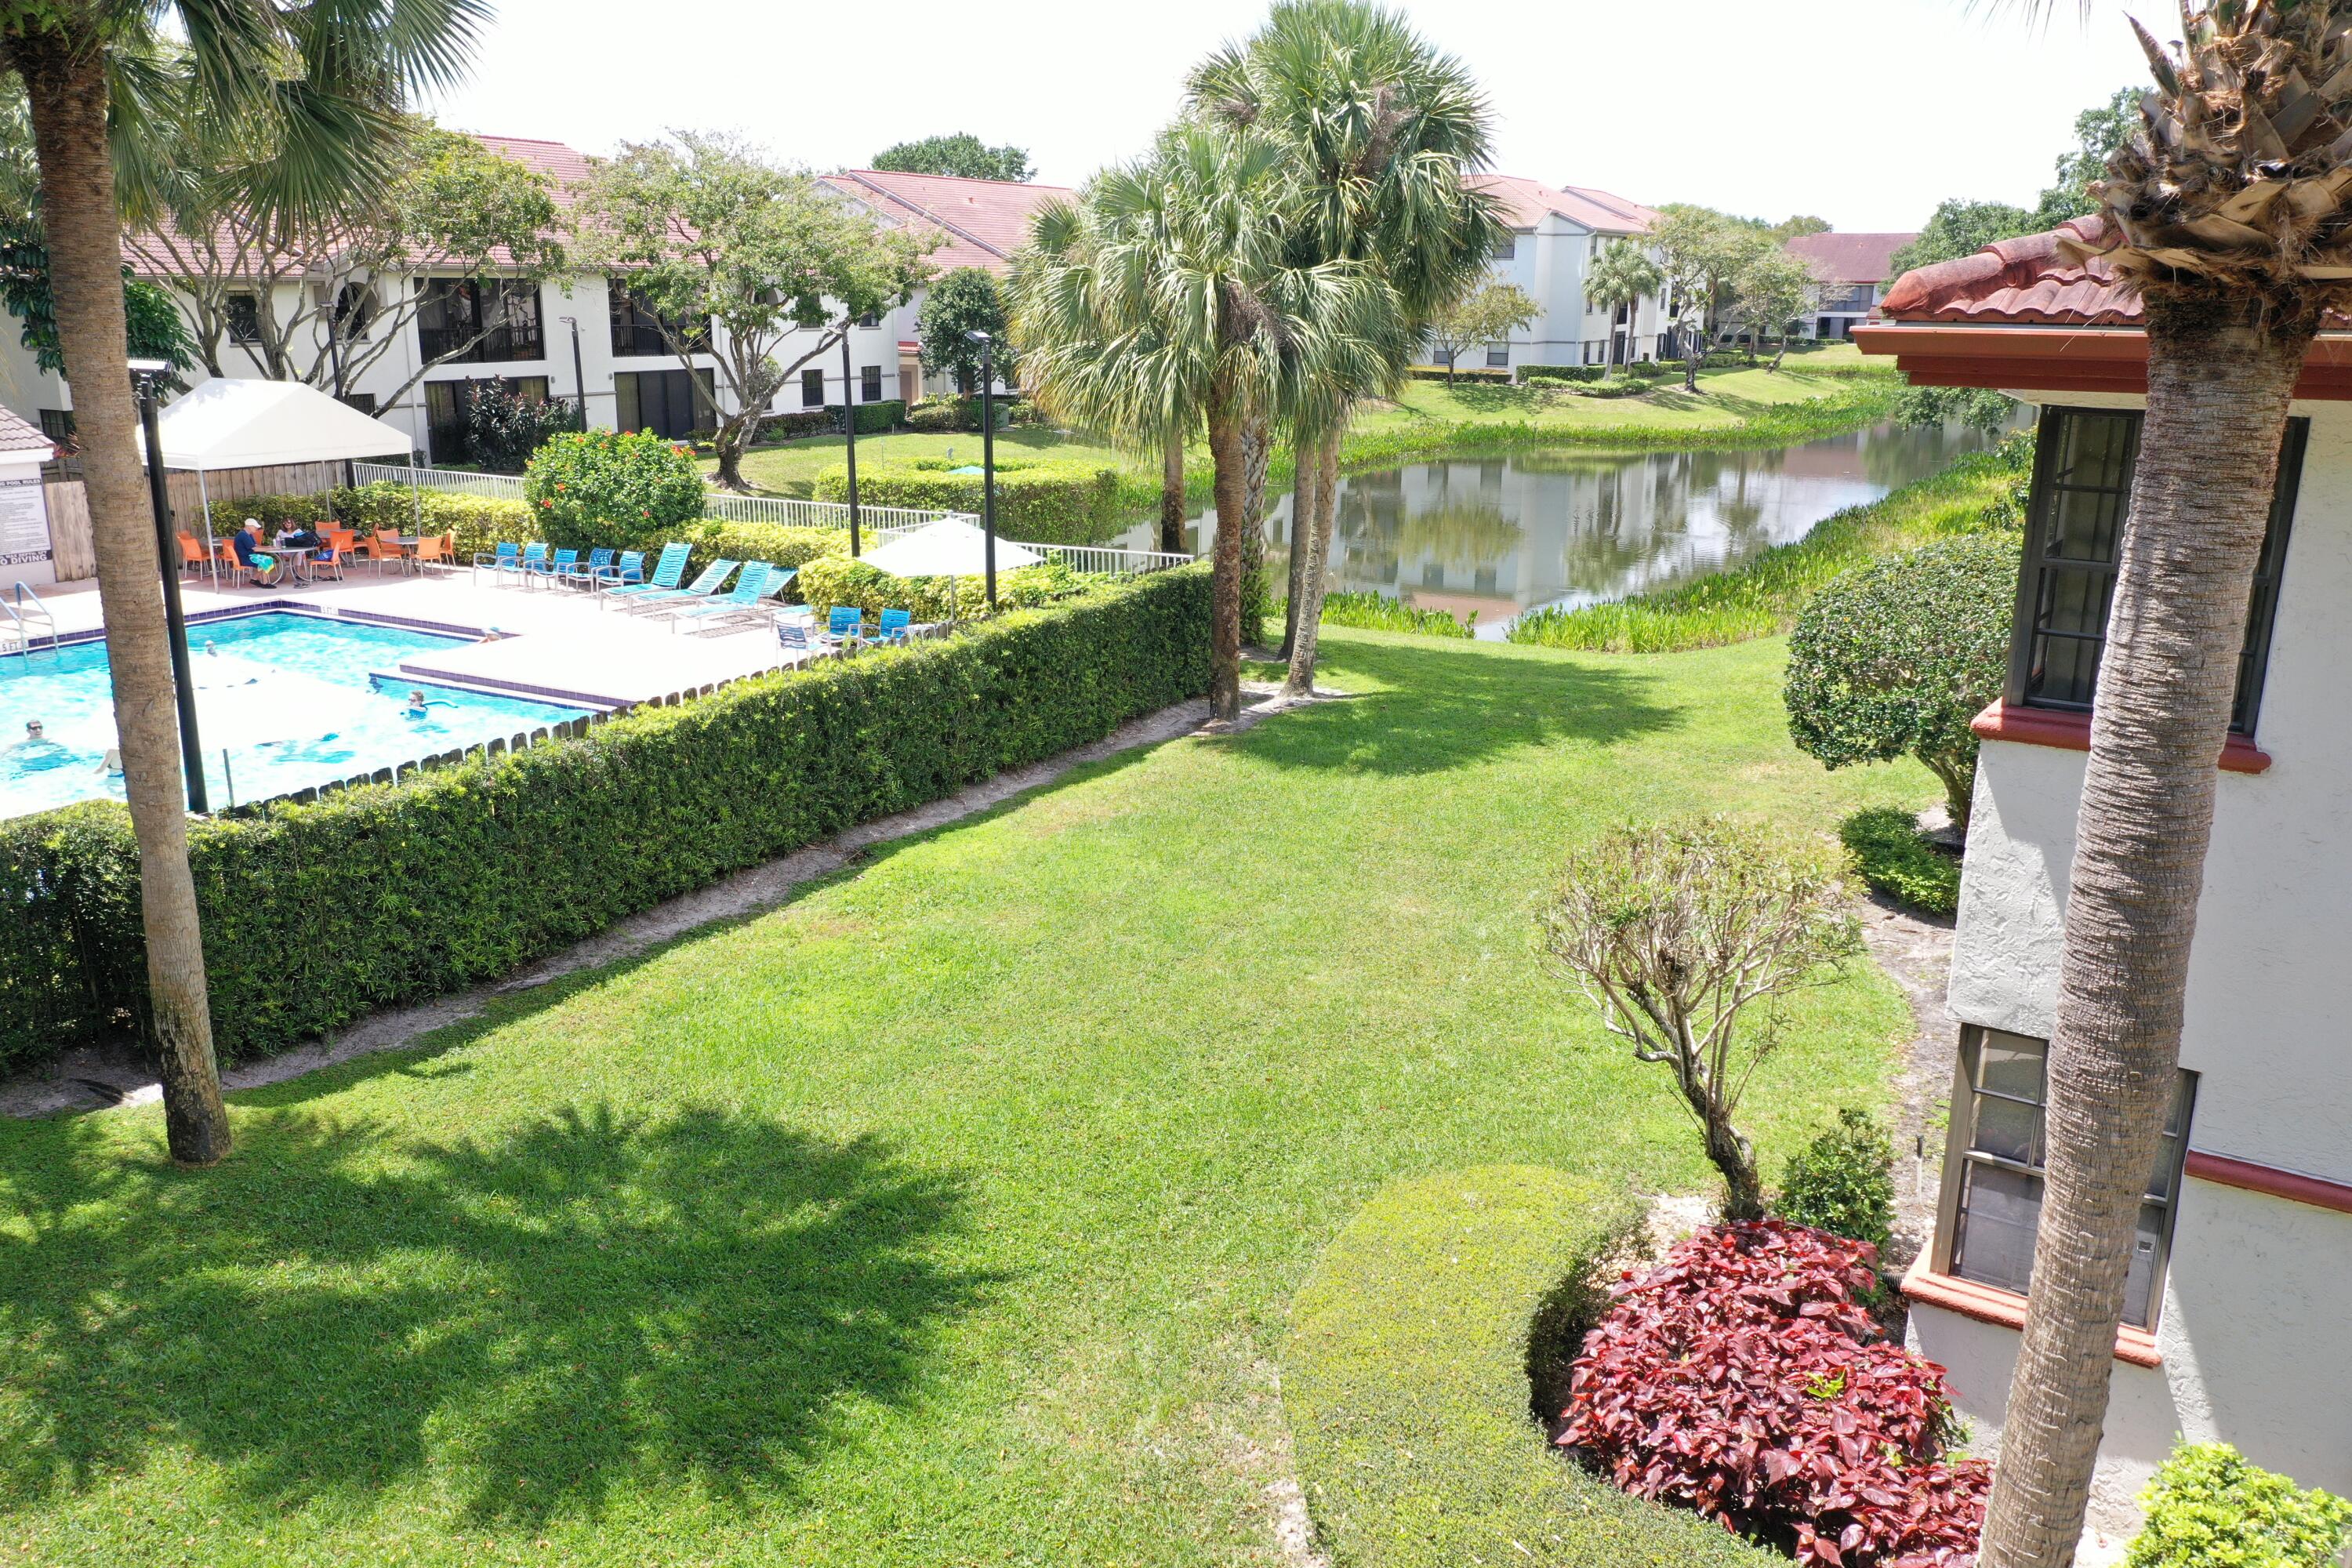 Property for Sale at 5181 Brisata Circle J, Boynton Beach, Palm Beach County, Florida - Bedrooms: 3 
Bathrooms: 2  - $300,000